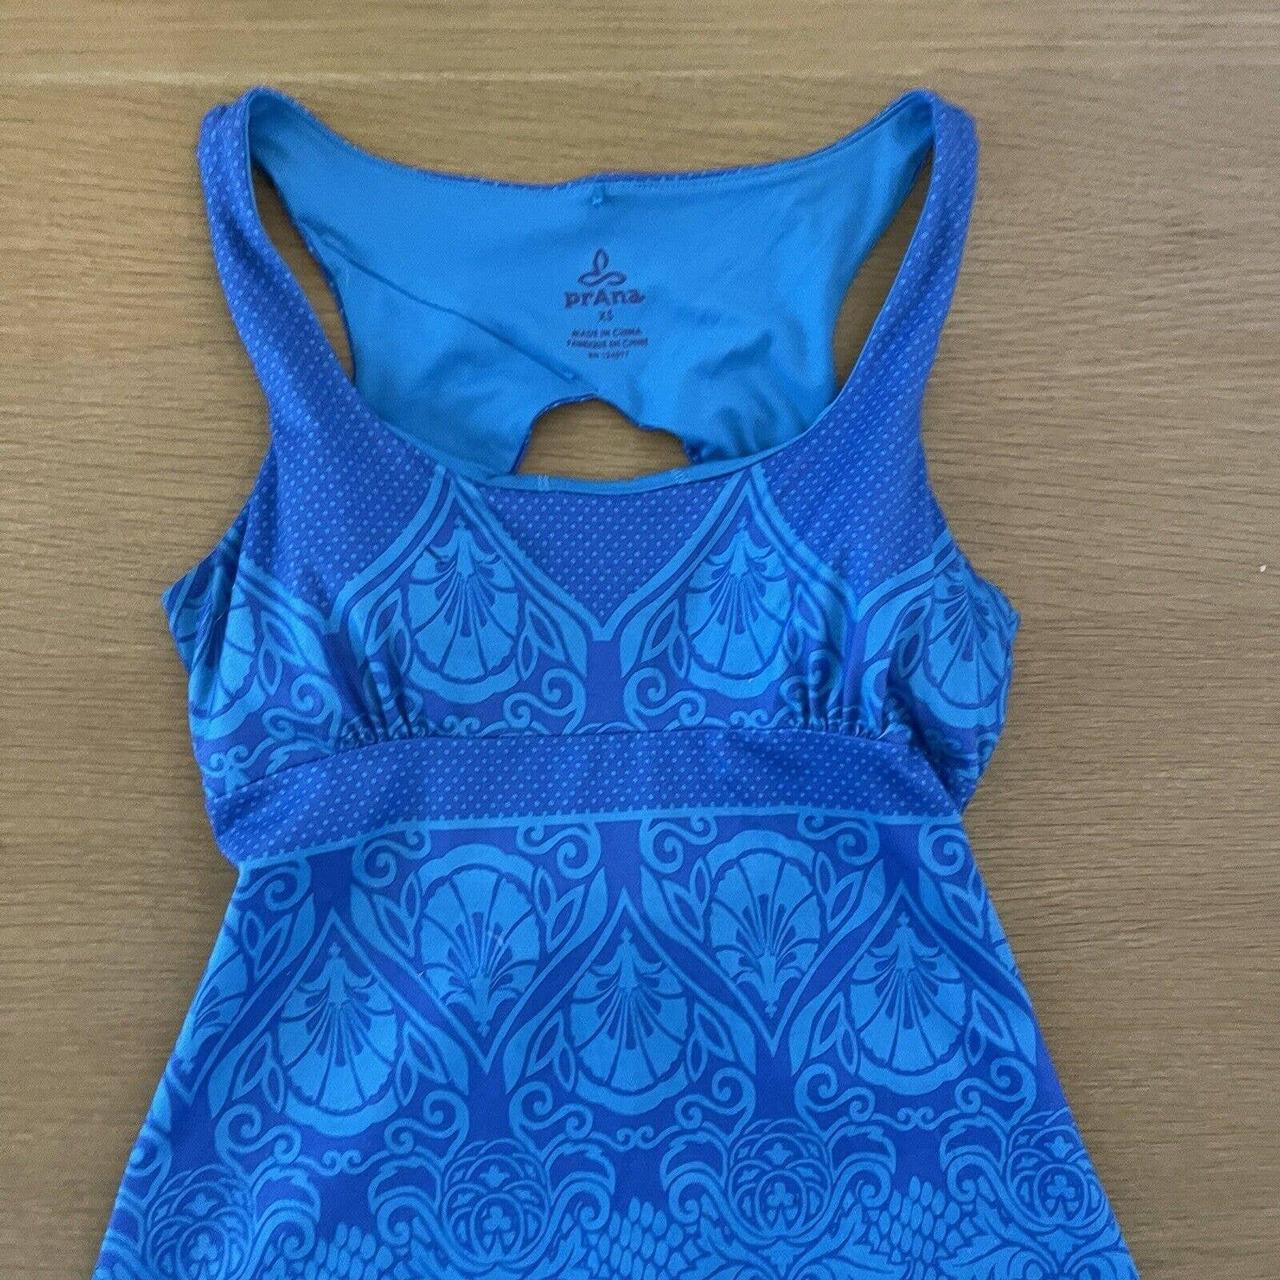 Prana Holly Dress in Blue